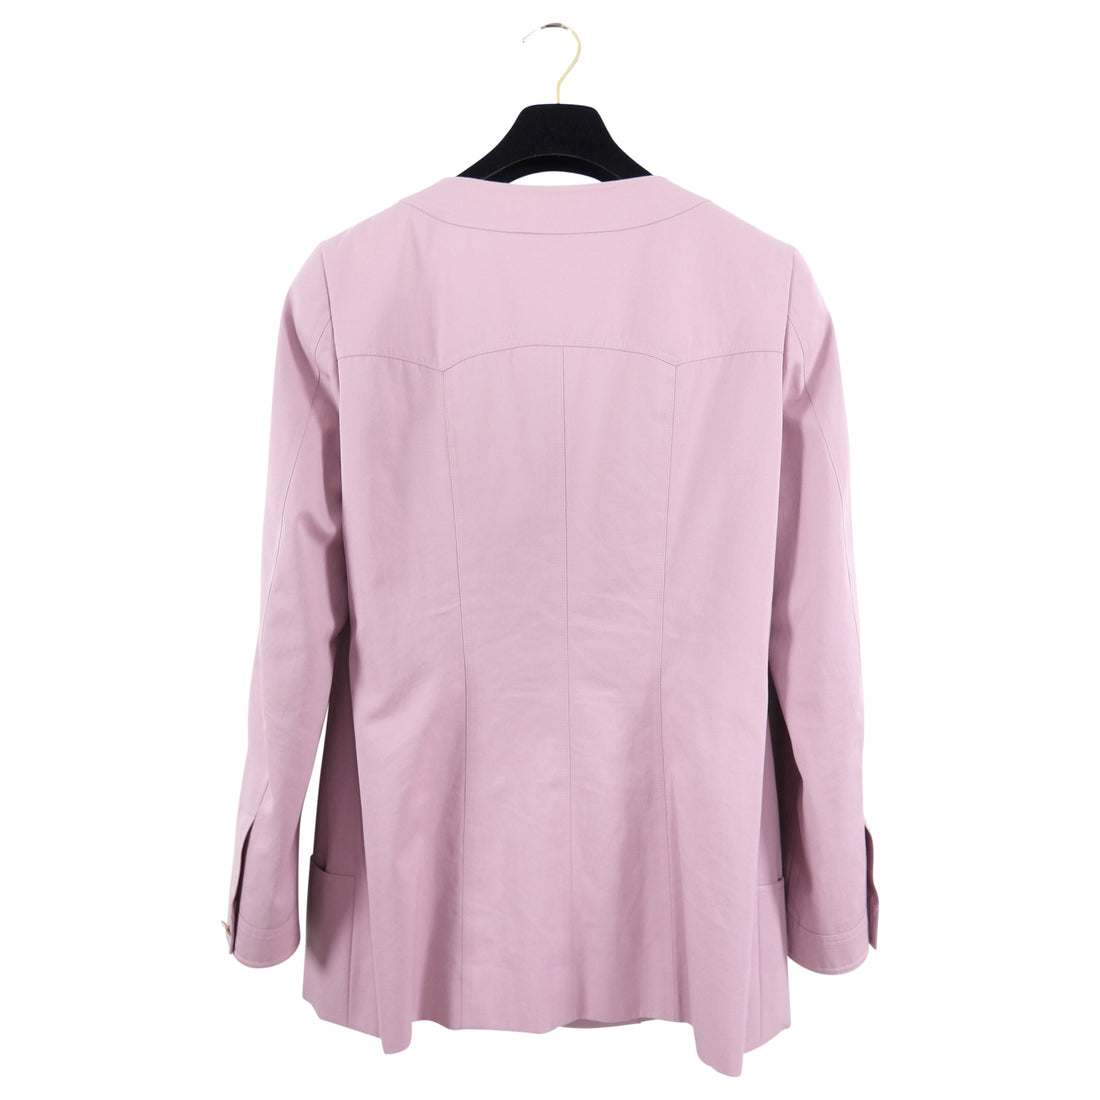 Chanel Vintage 2002 Spring Quartz Pink Cotton Blazer Jacket - FR40 / 8